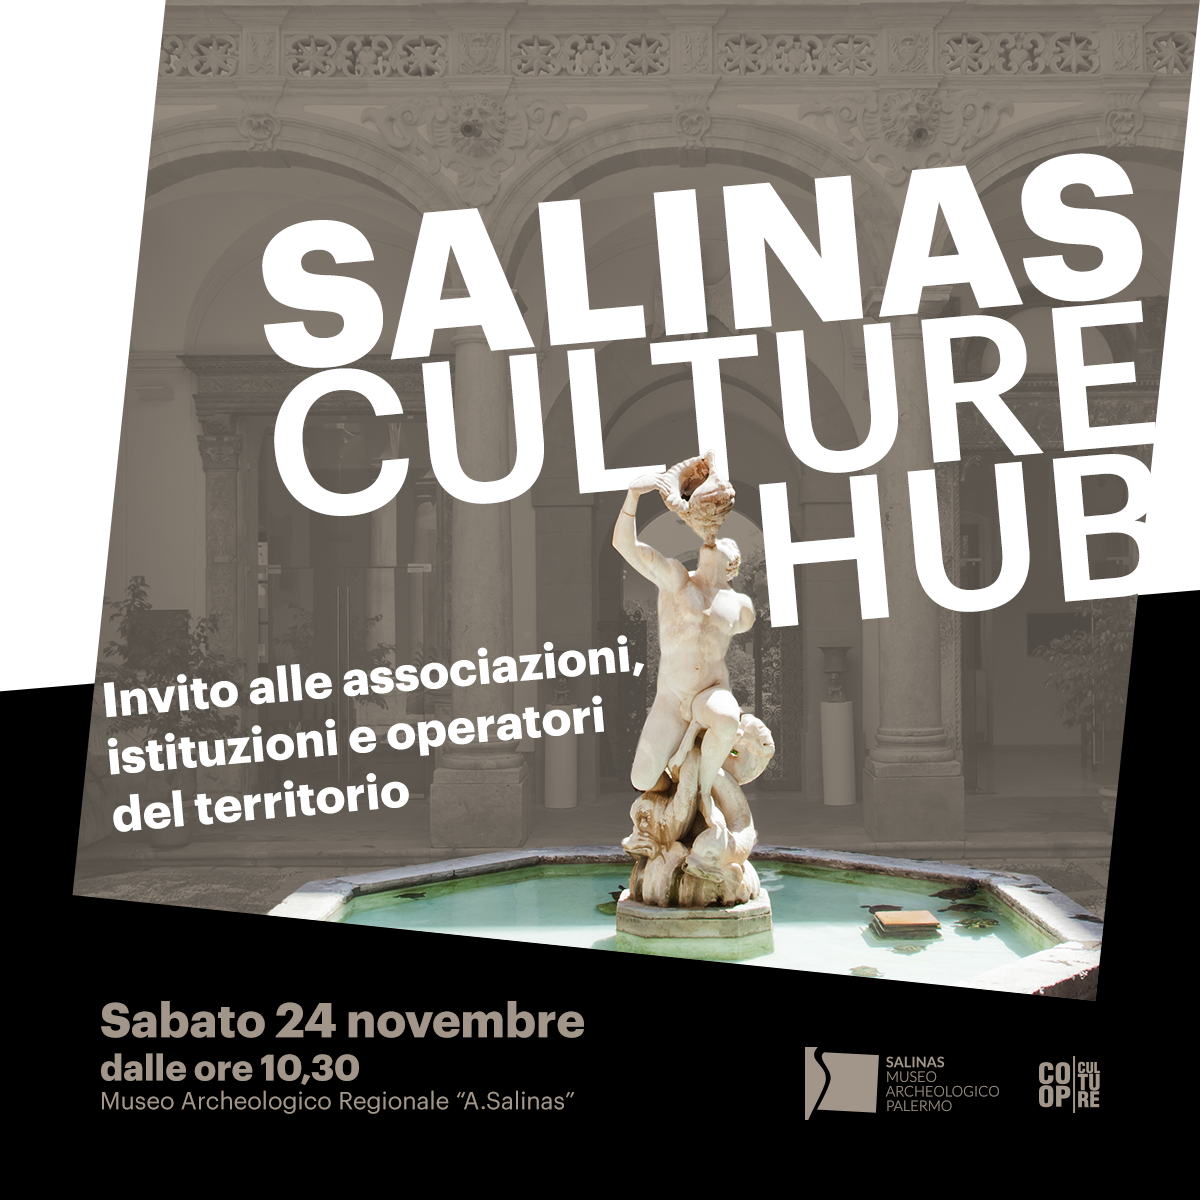 Salinas Culture Hub